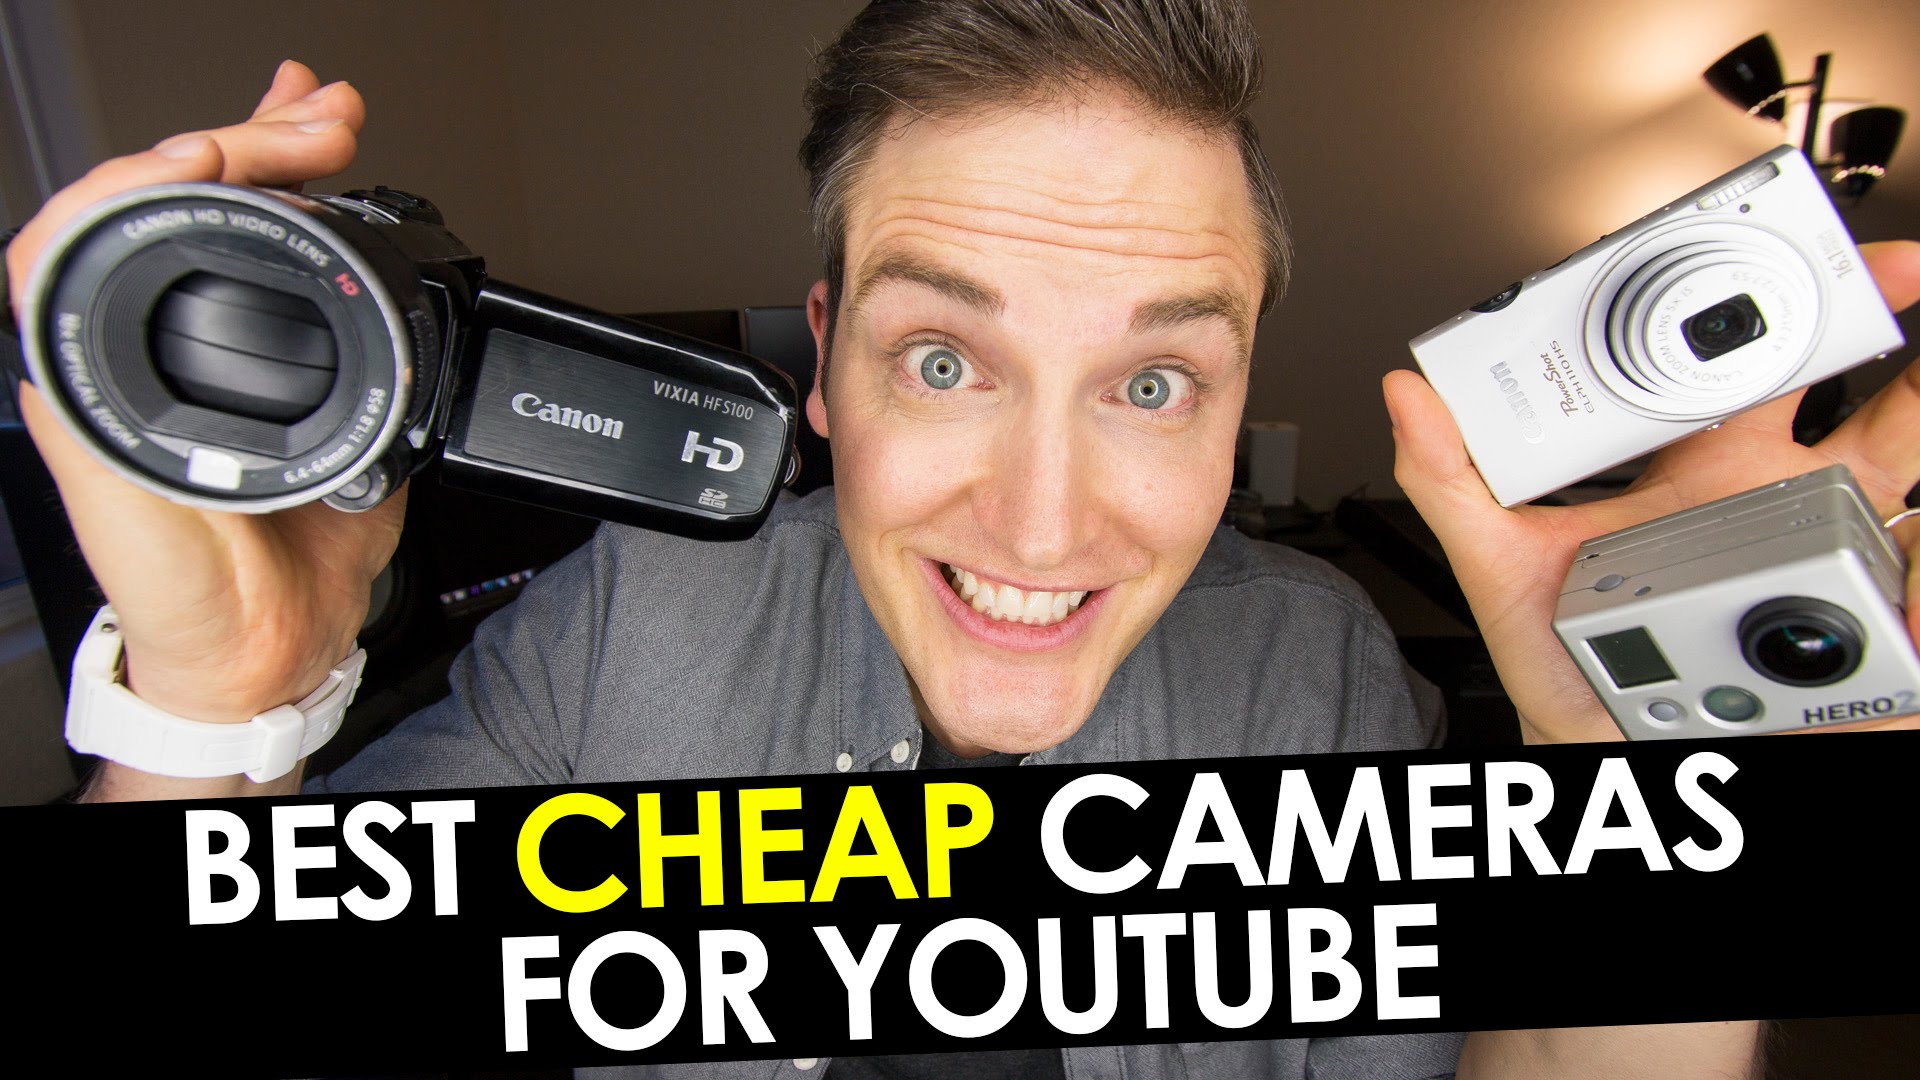 Best Cheap Cameras for YouTube Videos — 6 Budget Camera Reviews